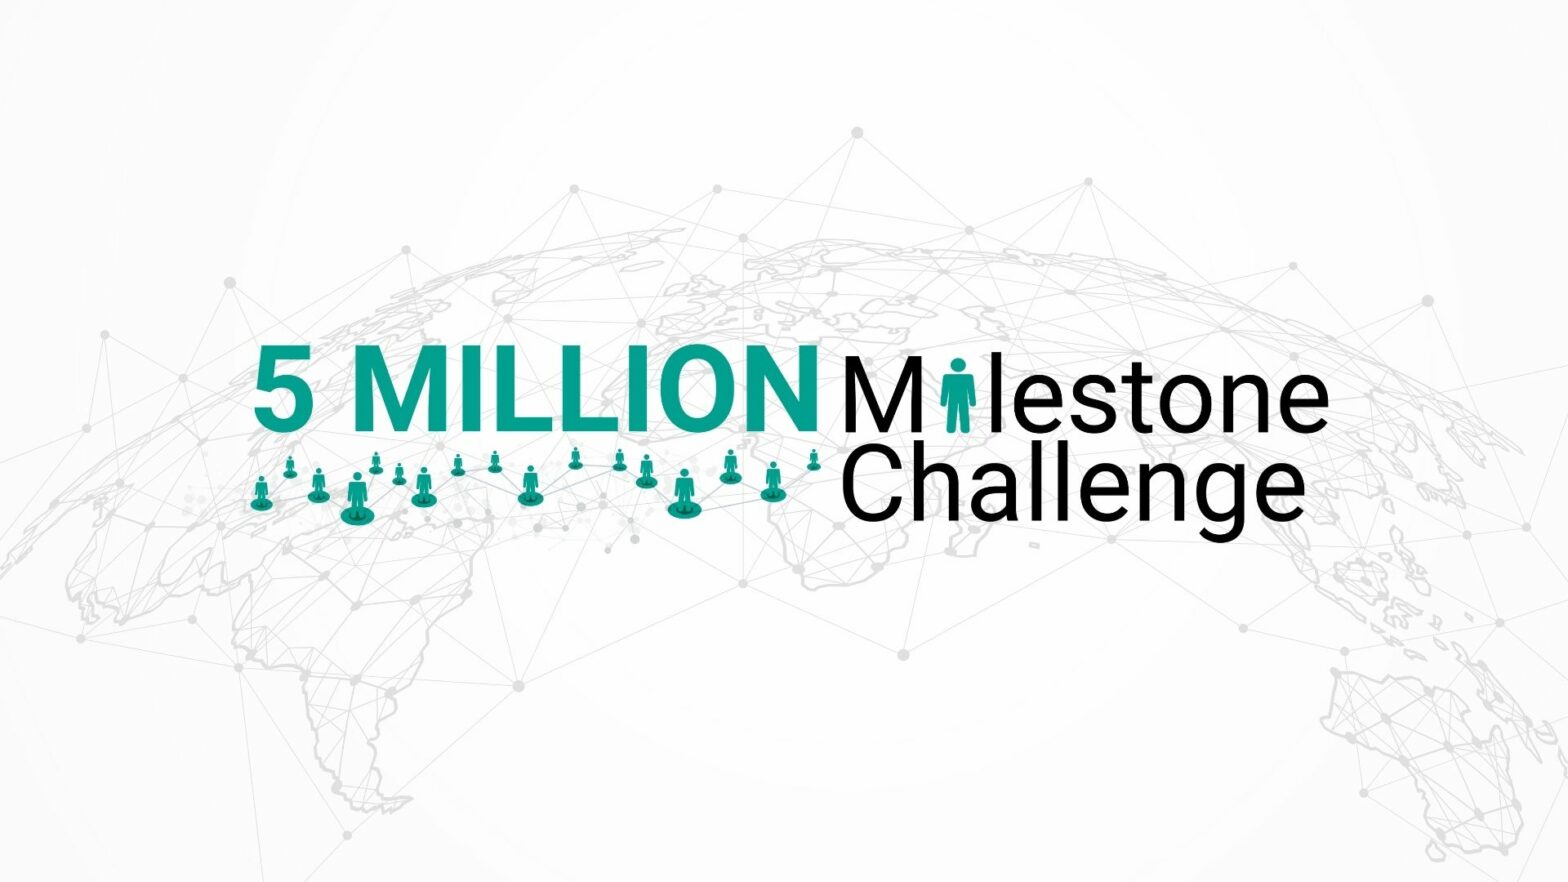 5 MILLION MILESTONE CHALLENGE